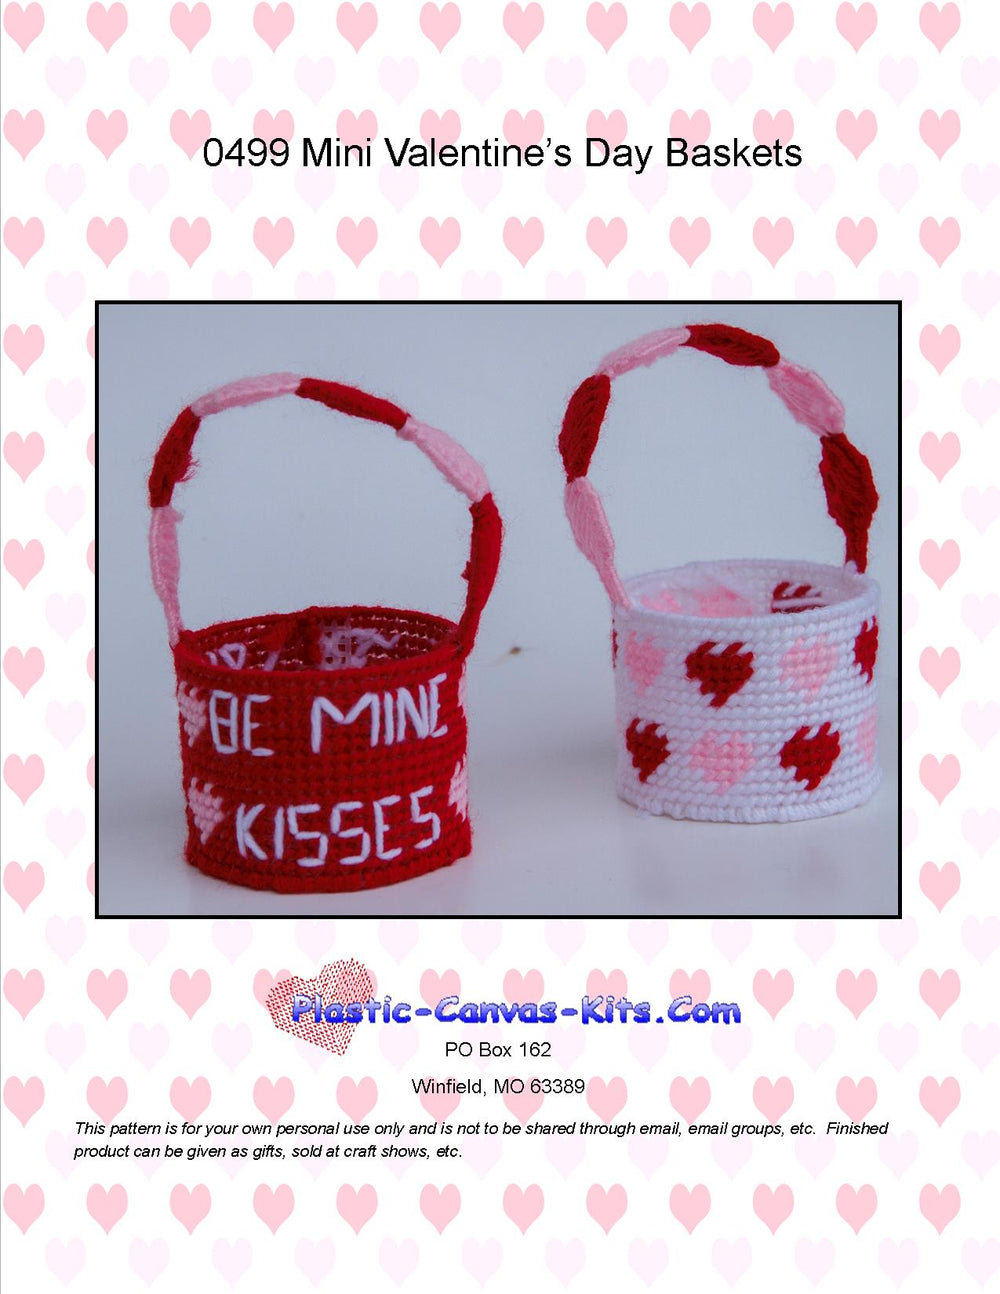 Mini Valetnine Baskets